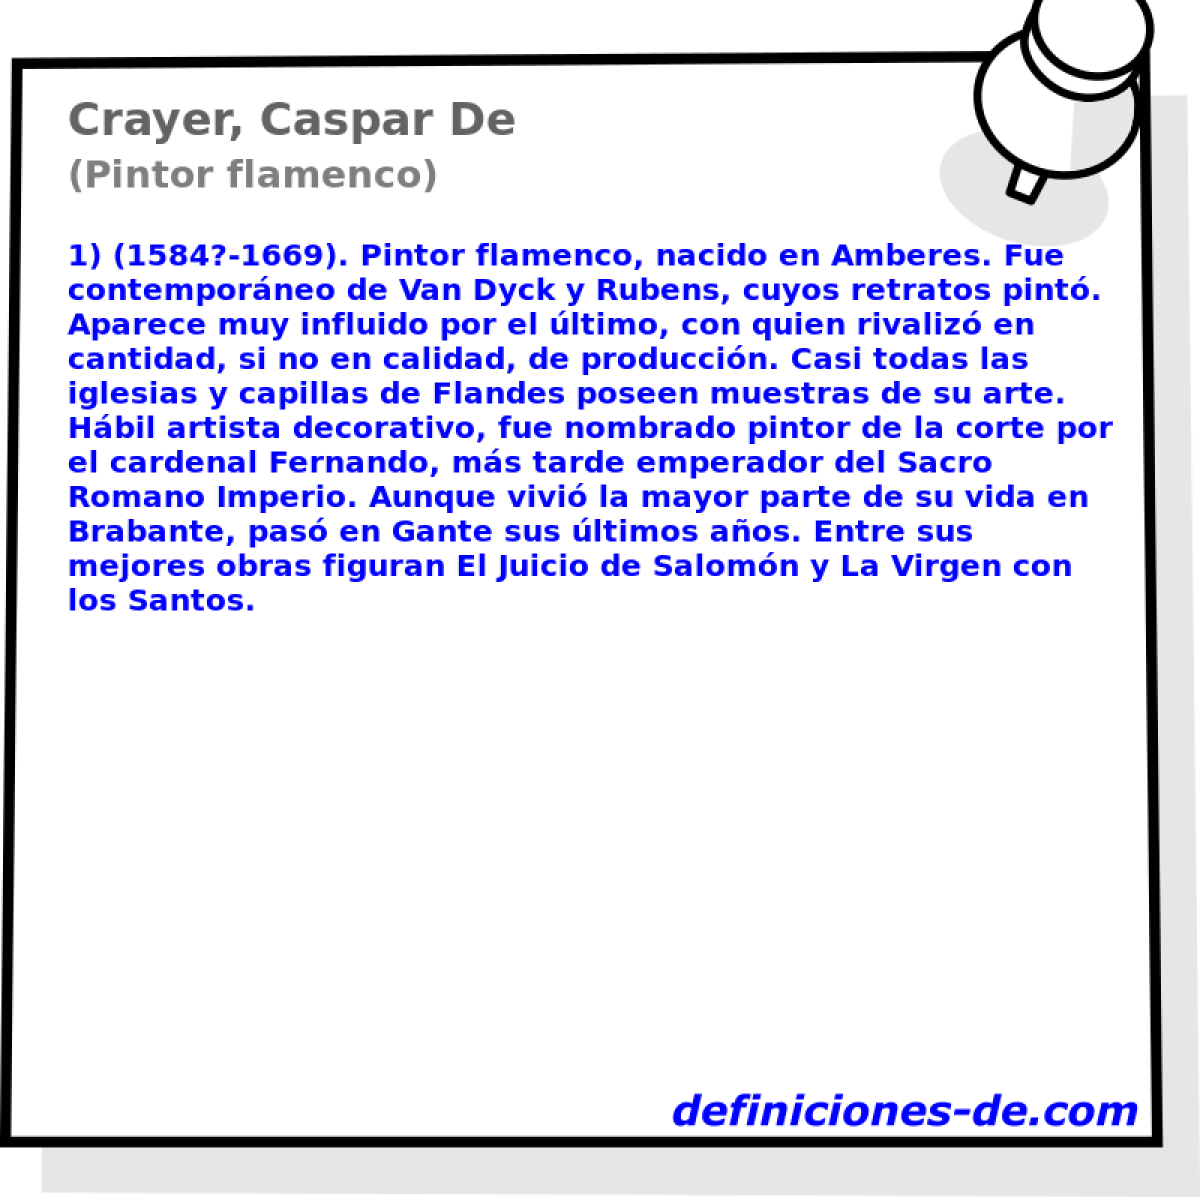 Crayer, Caspar De (Pintor flamenco)